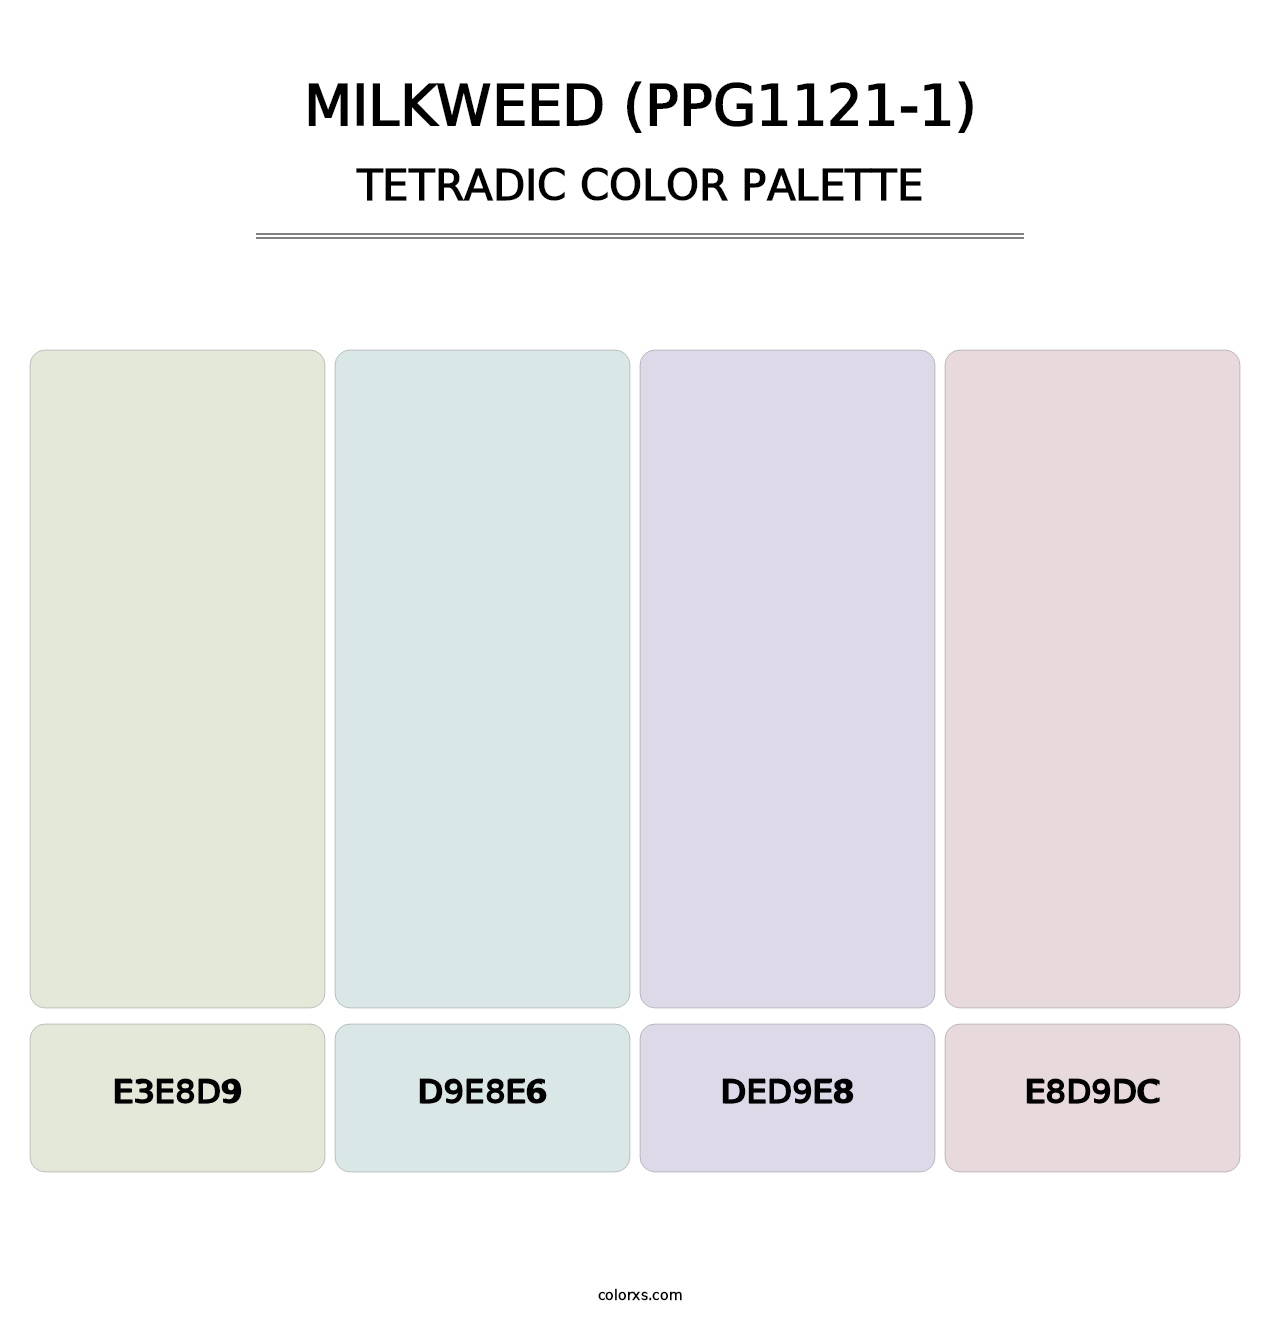 Milkweed (PPG1121-1) - Tetradic Color Palette